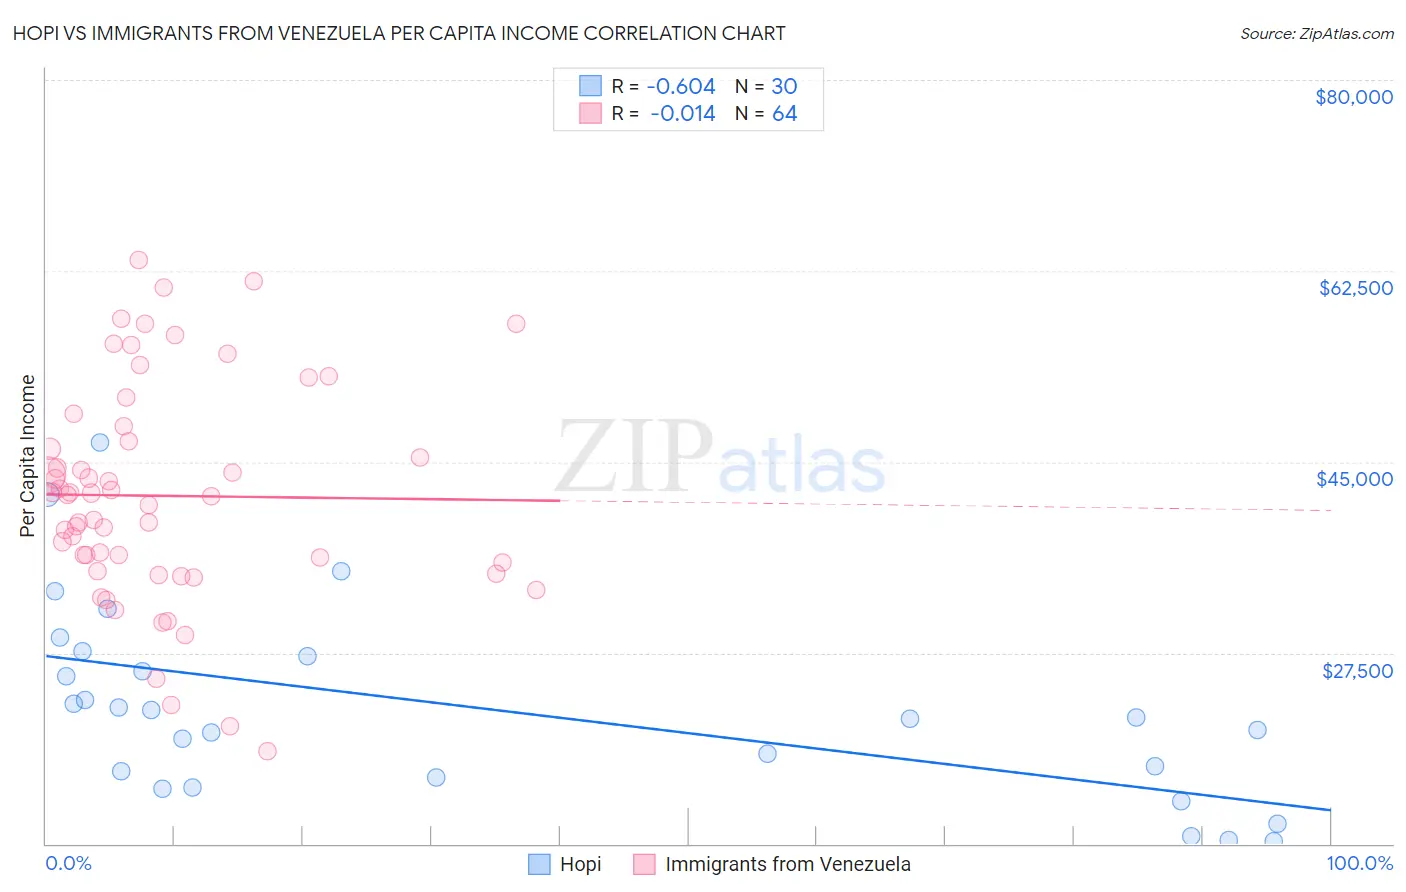 Hopi vs Immigrants from Venezuela Per Capita Income